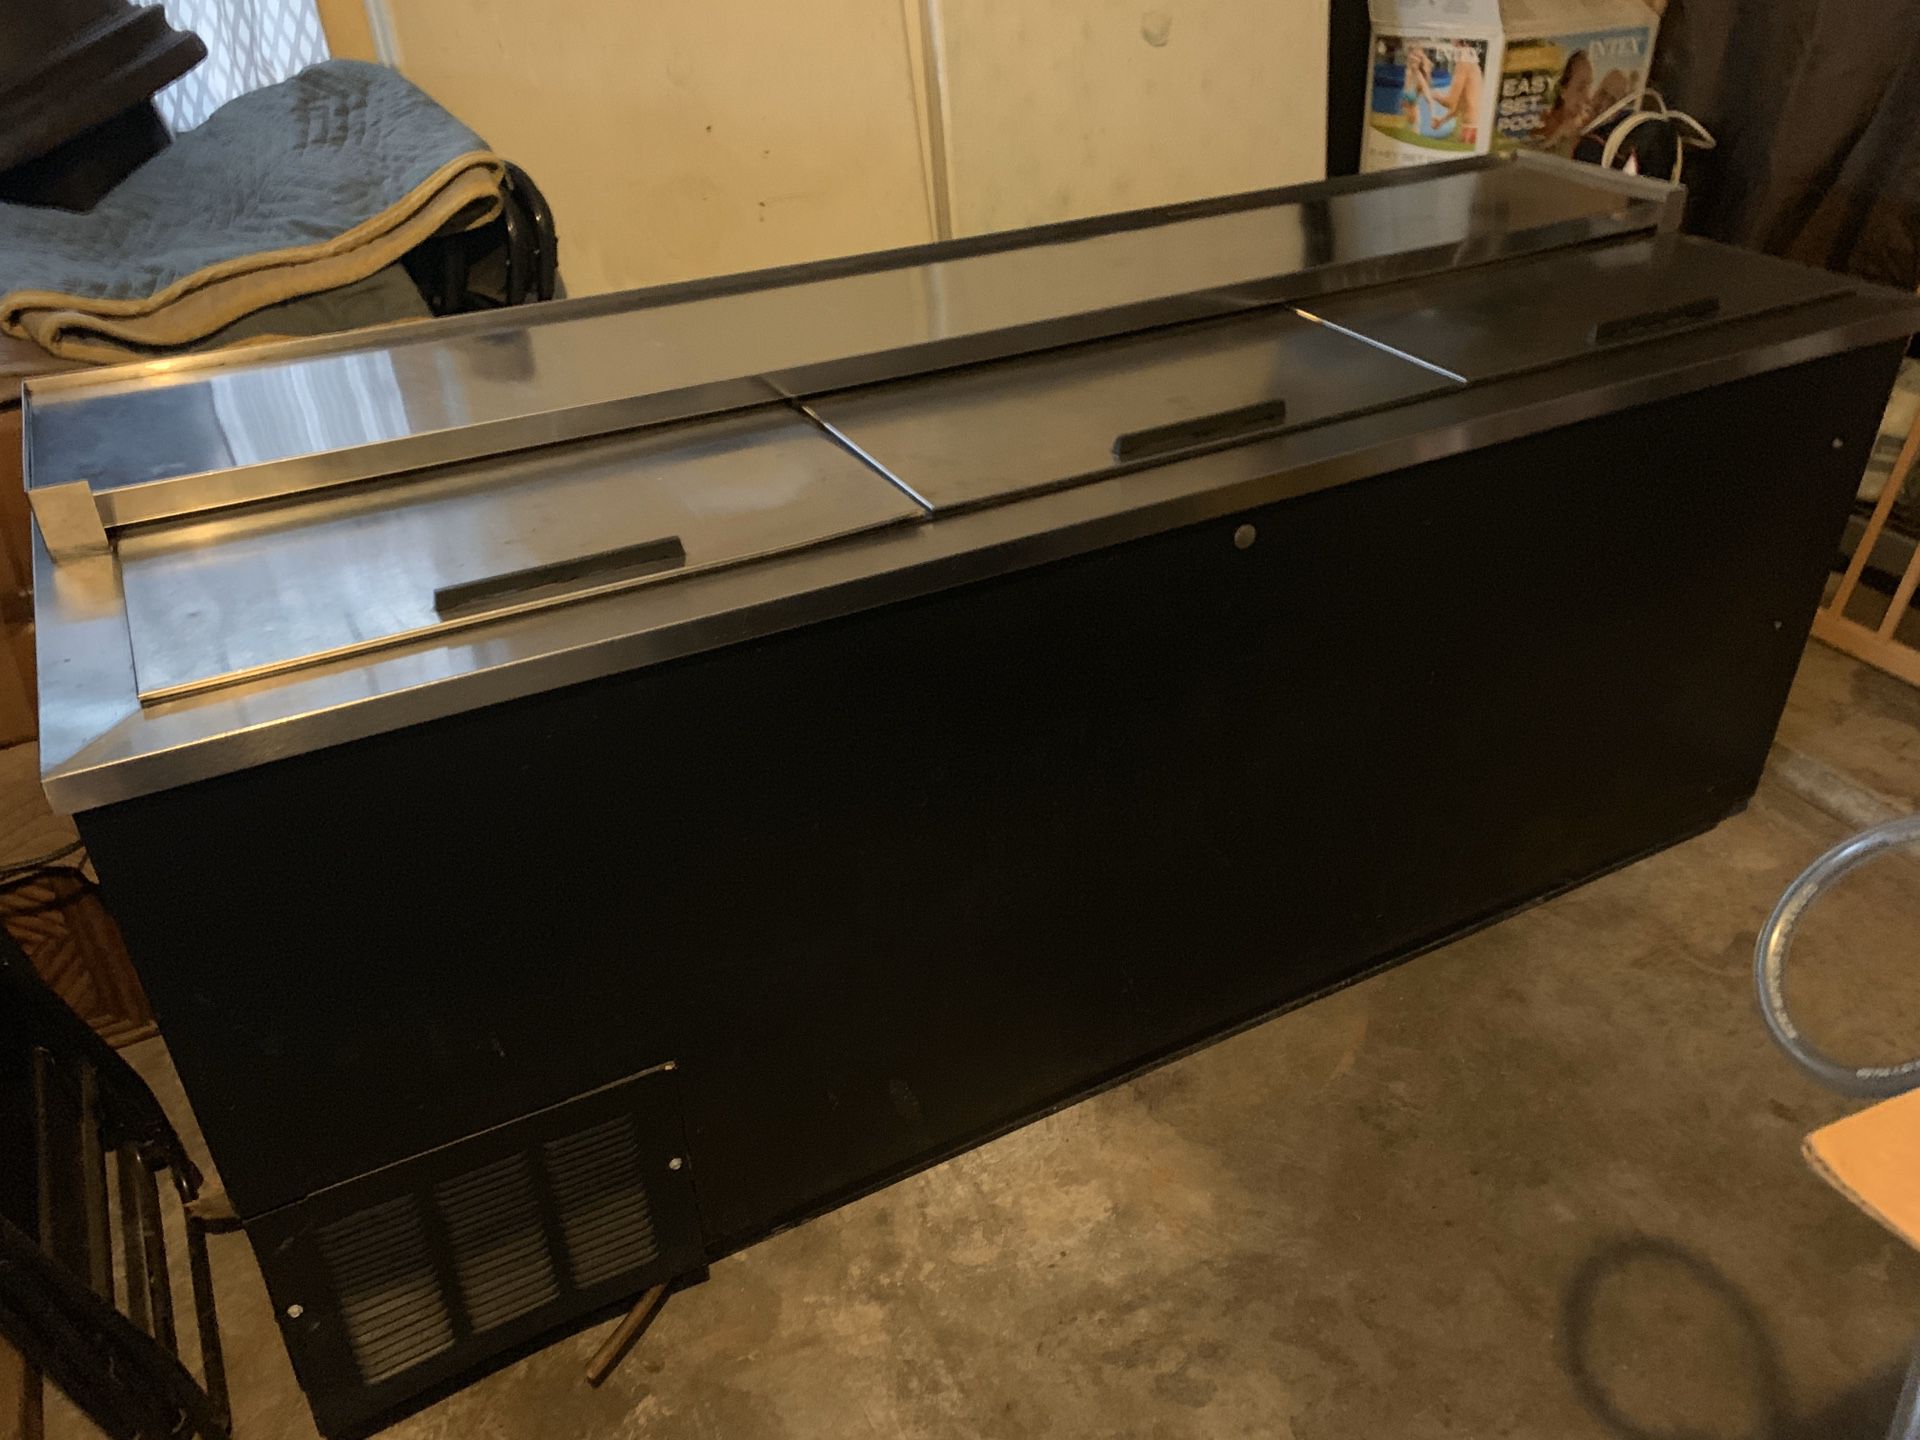 Commercial chest refrigerator 2’ x 6’ ; Model; BKV DW79 Beverage Air